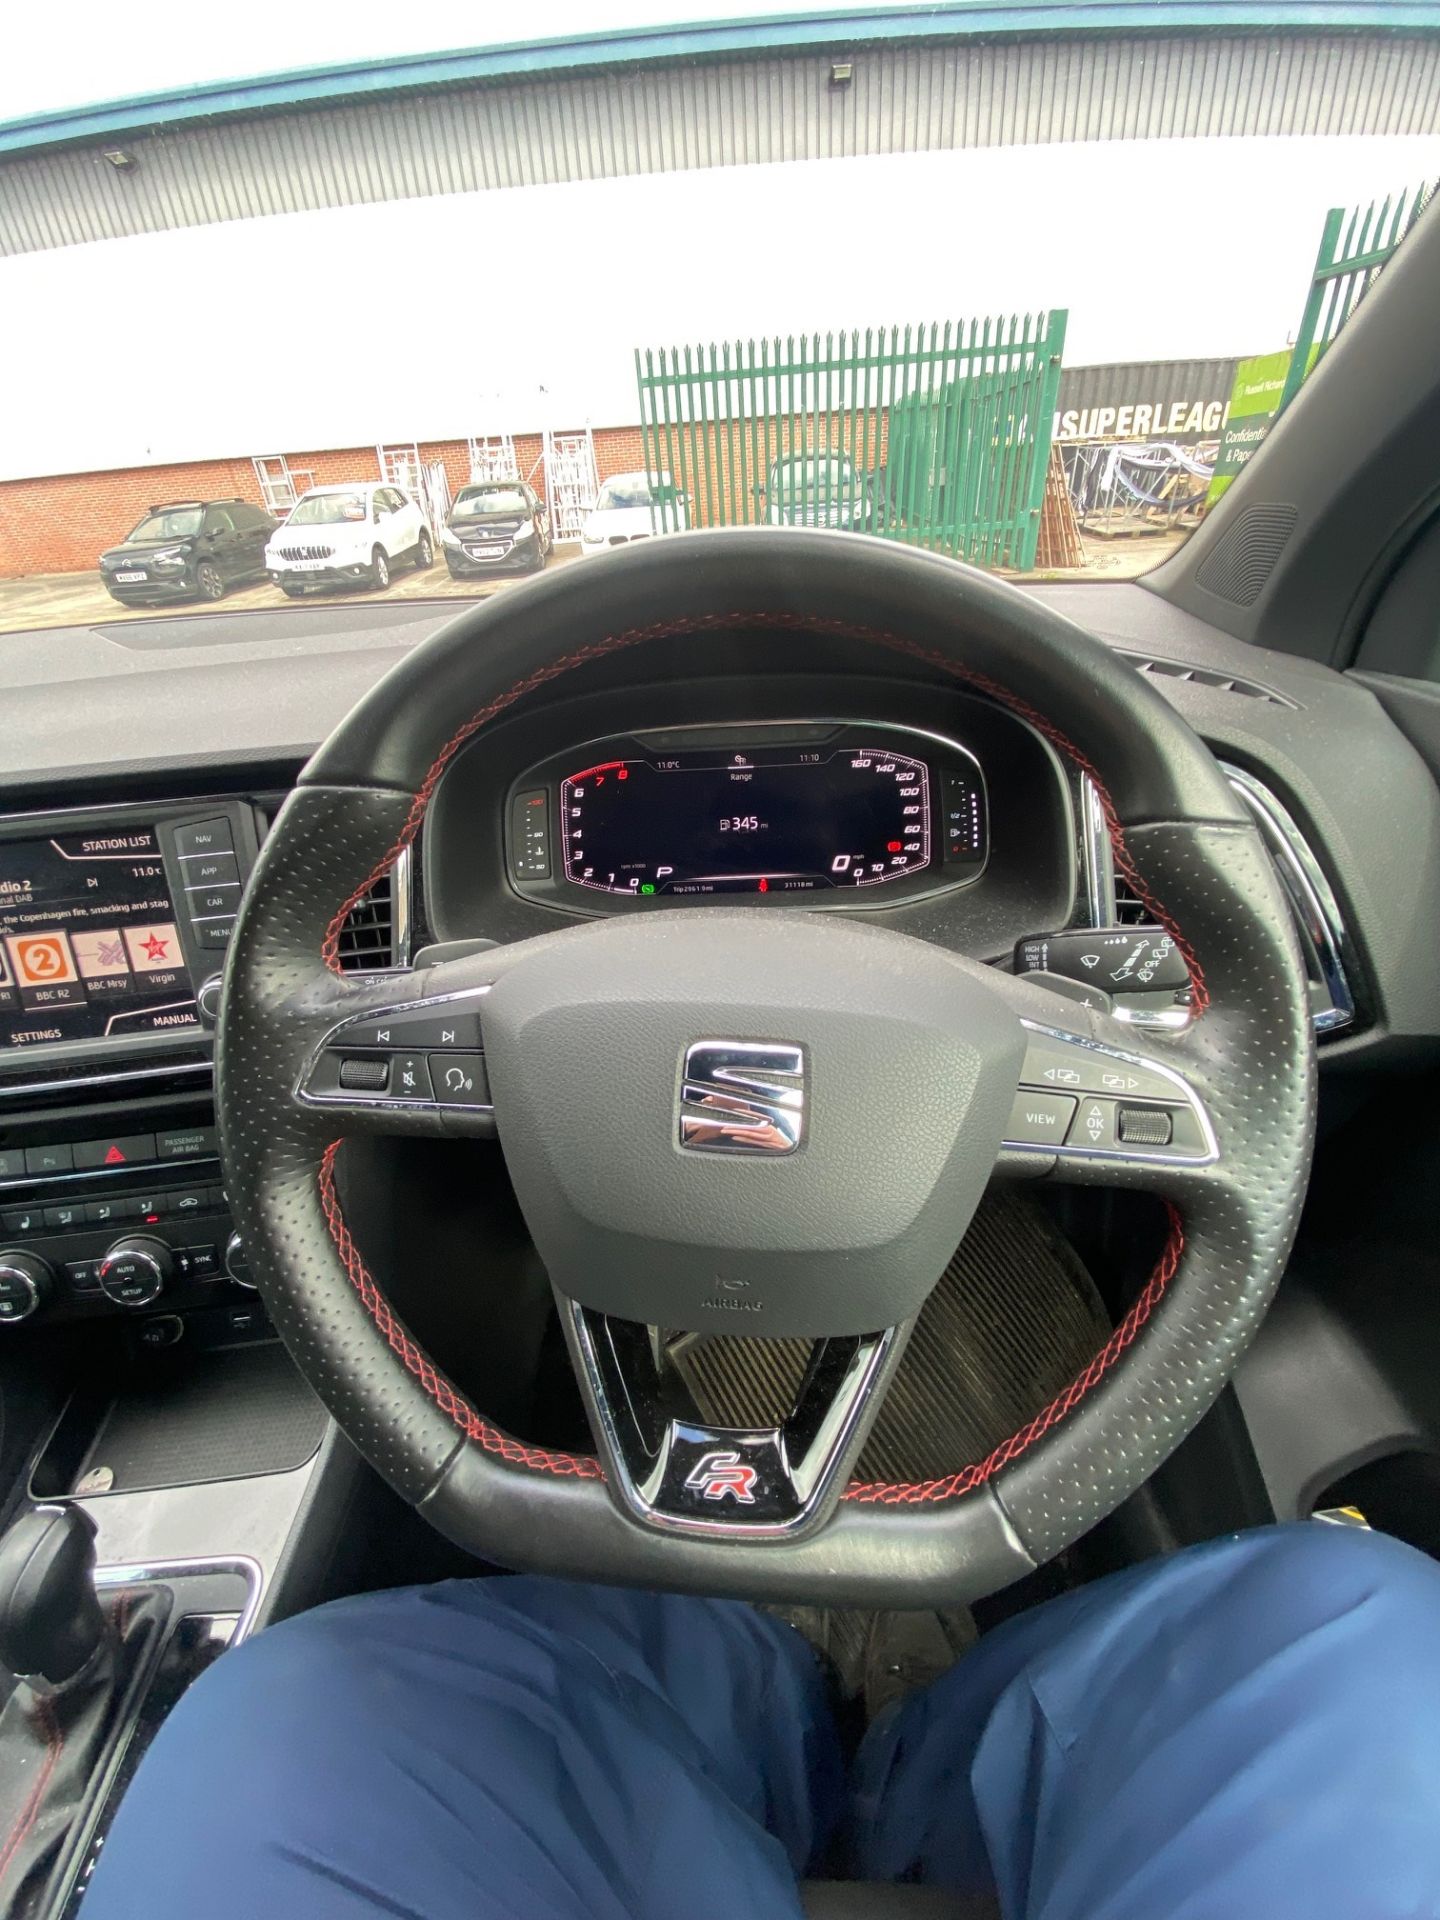 SEAT ATECA (YOM 2019) FR SPORT TSi 4 DRIVE 2.0 five door hatchback - petrol - black. - Image 5 of 13